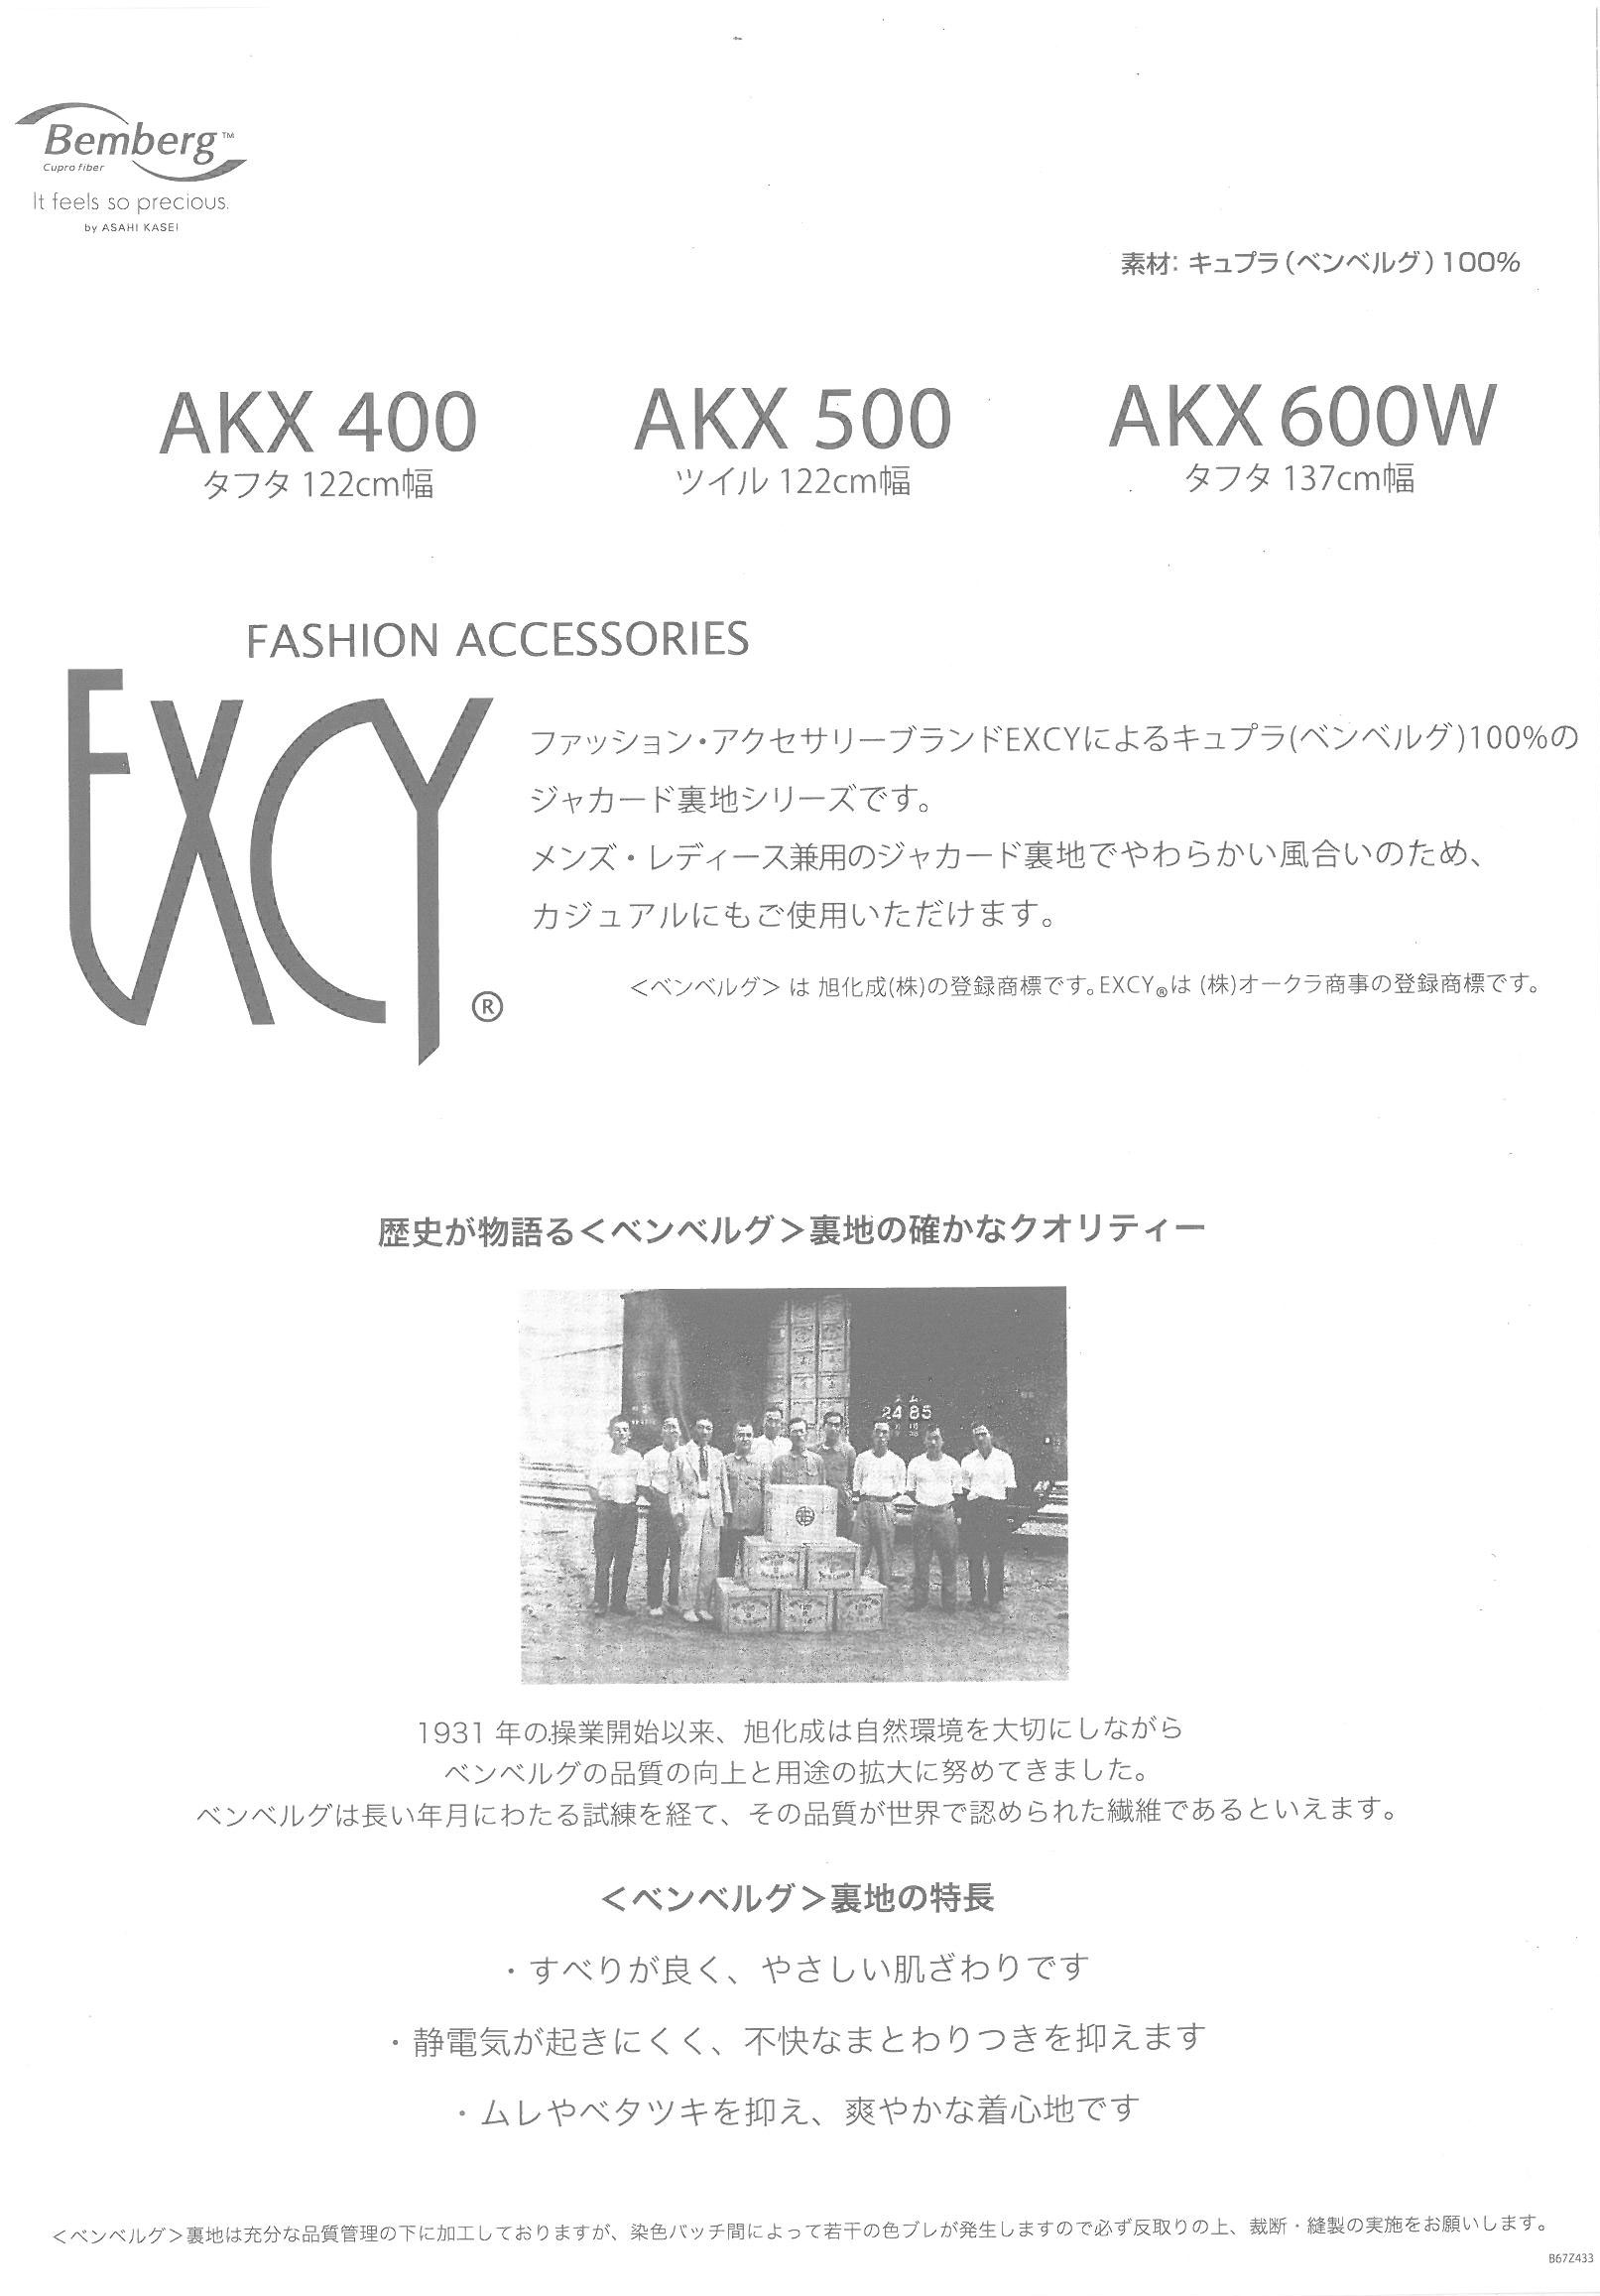 AKX400 Blumenmuster Jacquard Bemberg 100% Futter EXCY Original[Beschichtung] Asahi KASEI Sub-Foto